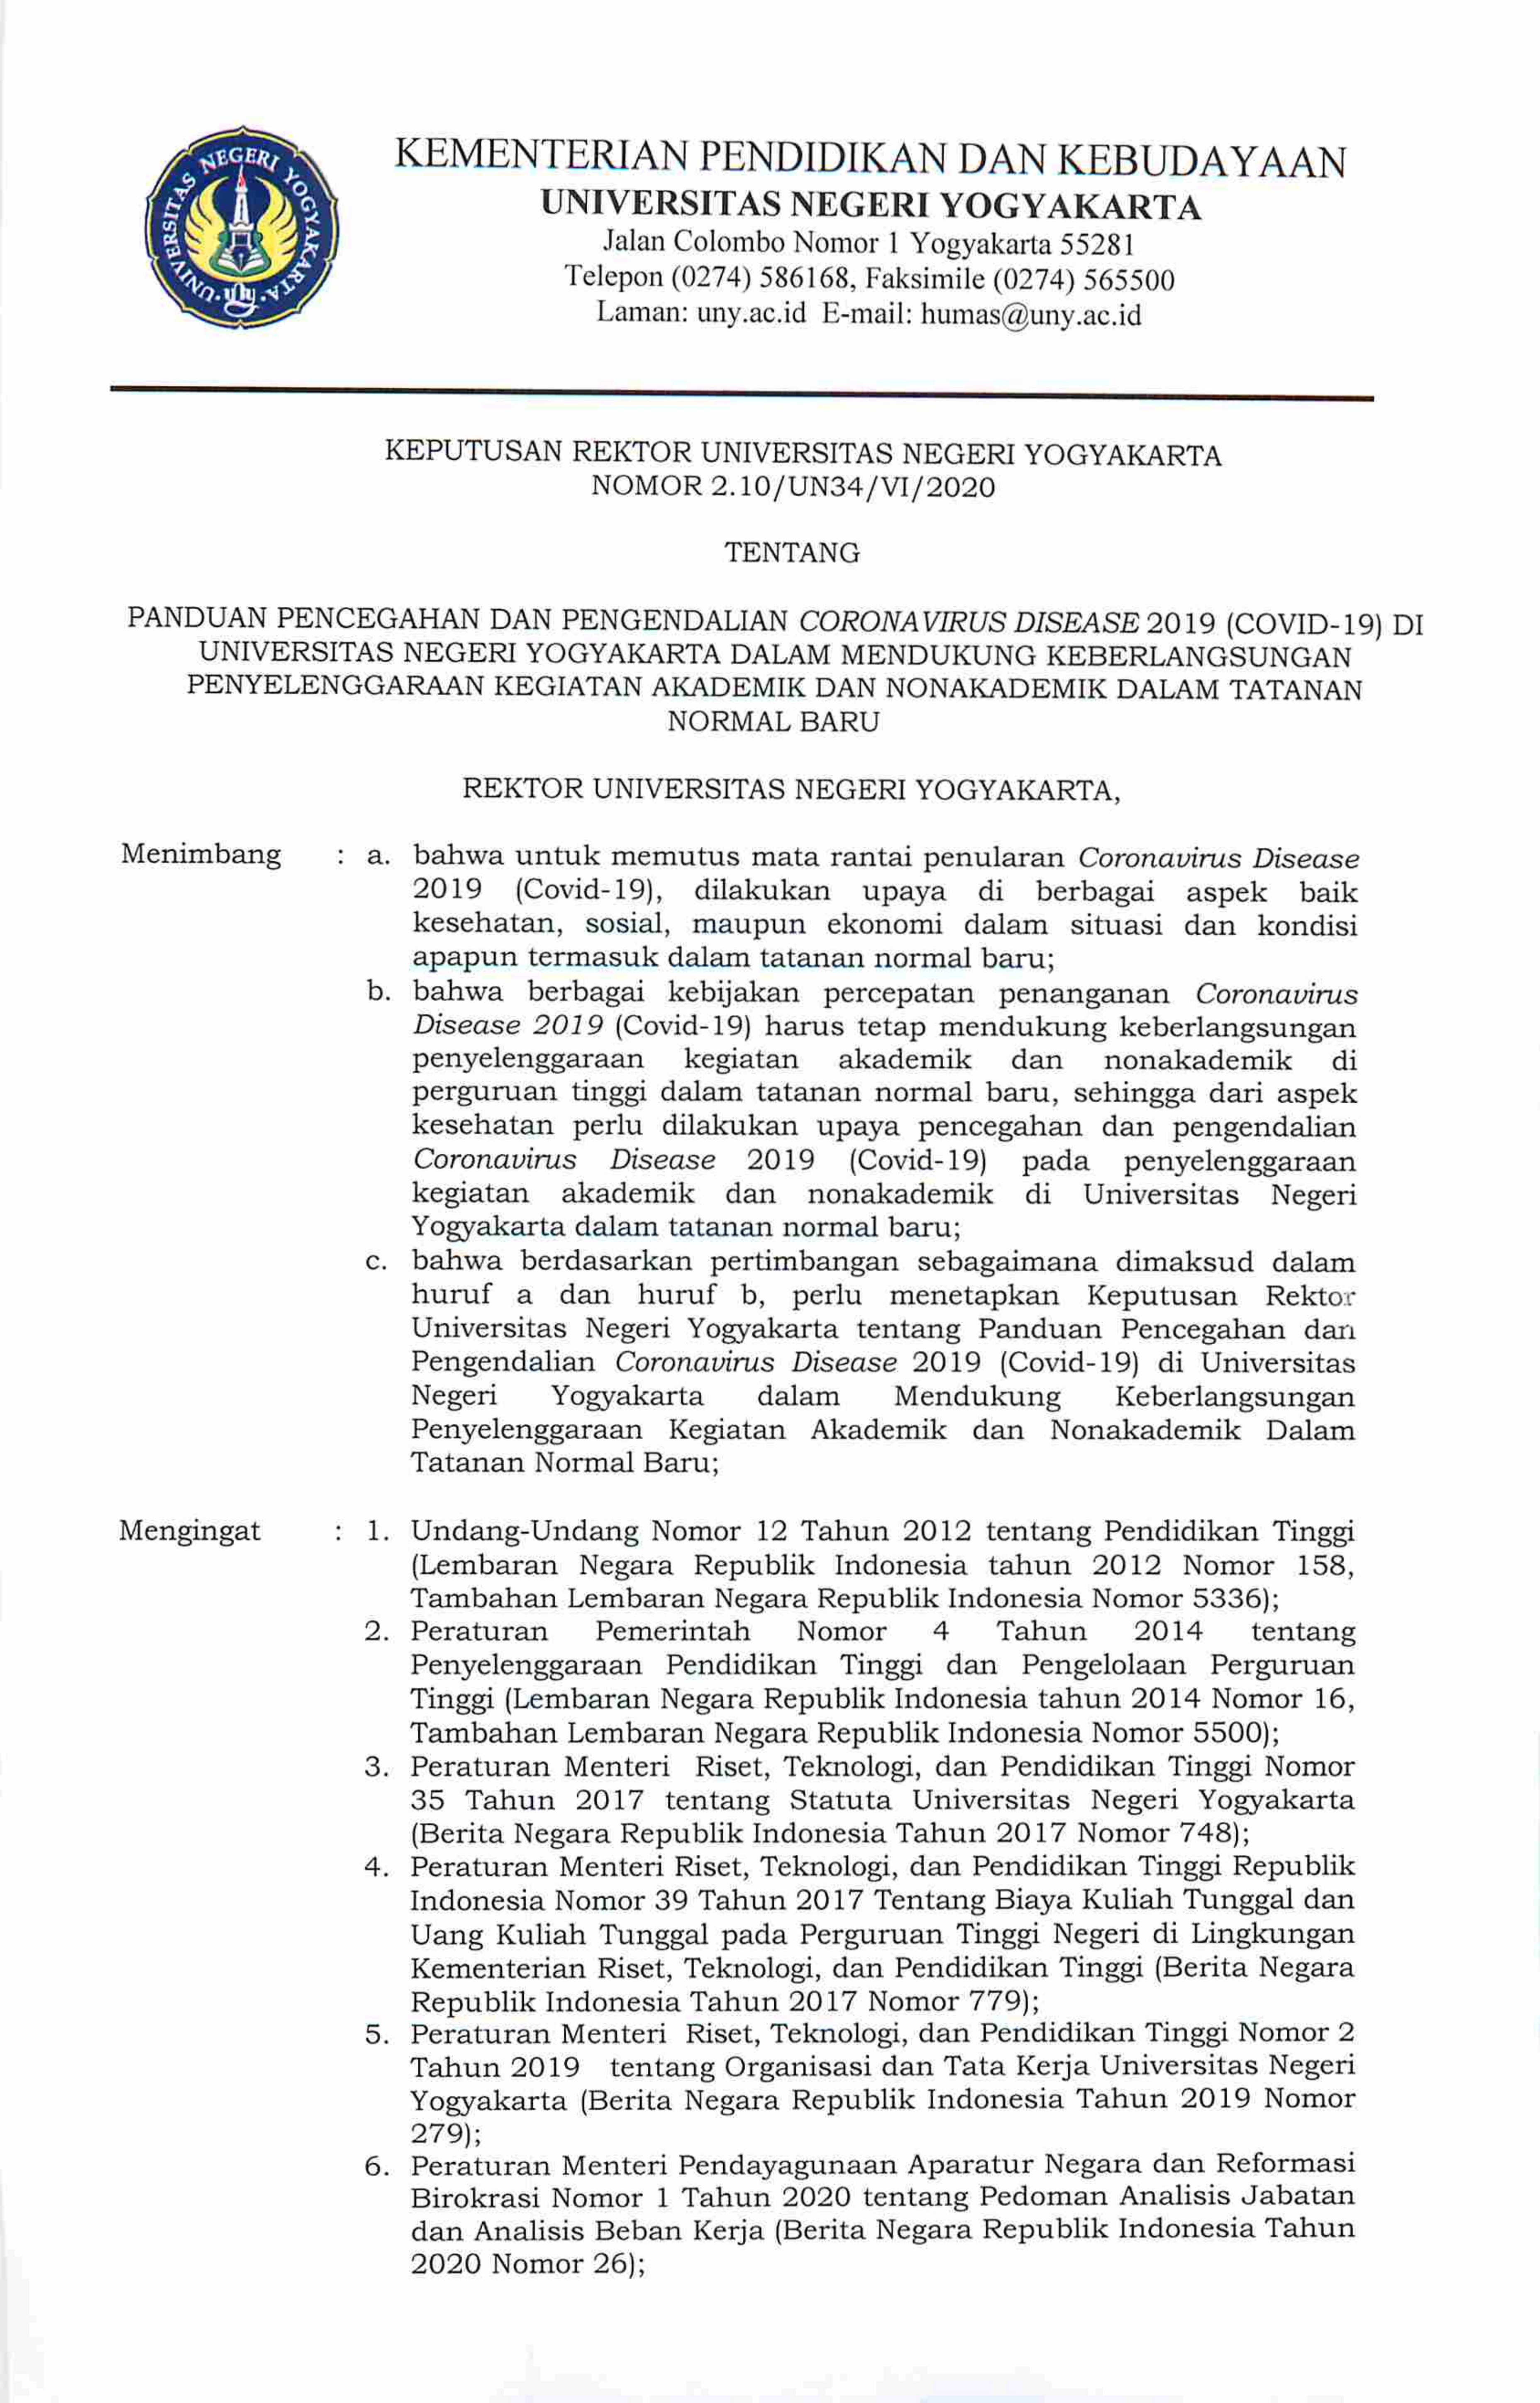 KEPUTUSAN REKTOR NO. 2.10/UN34/VI/2020 tentang Panduan Pencegahan dan Pengendalian Covid-19 di Universitas Negeri Yogyakarta dalam Tatanan Normal Baru